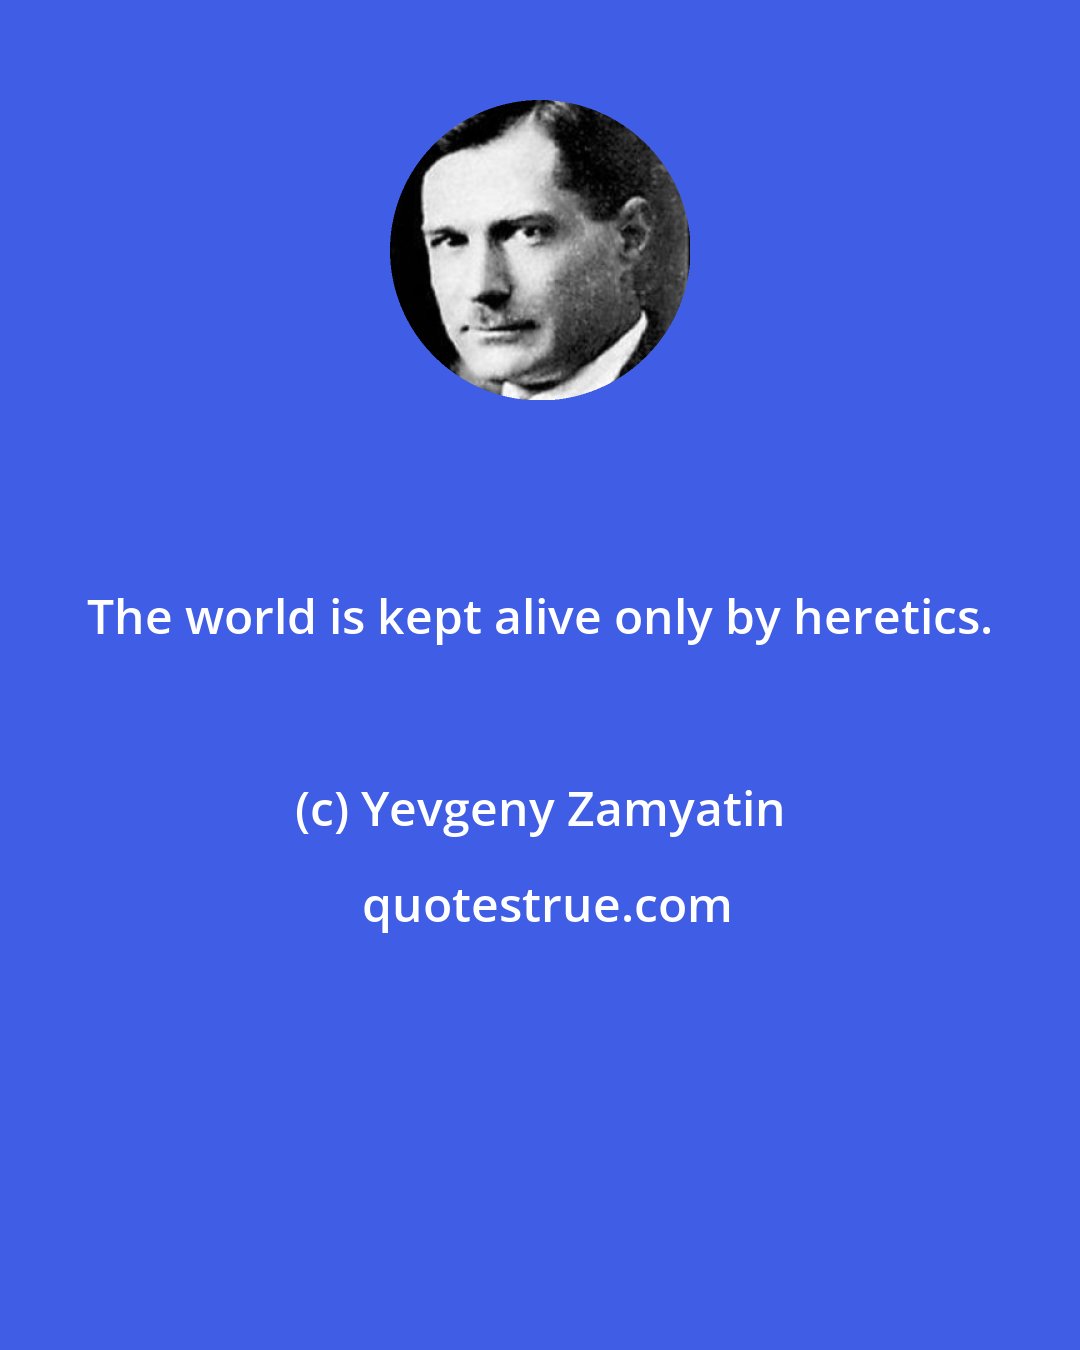 Yevgeny Zamyatin: The world is kept alive only by heretics.